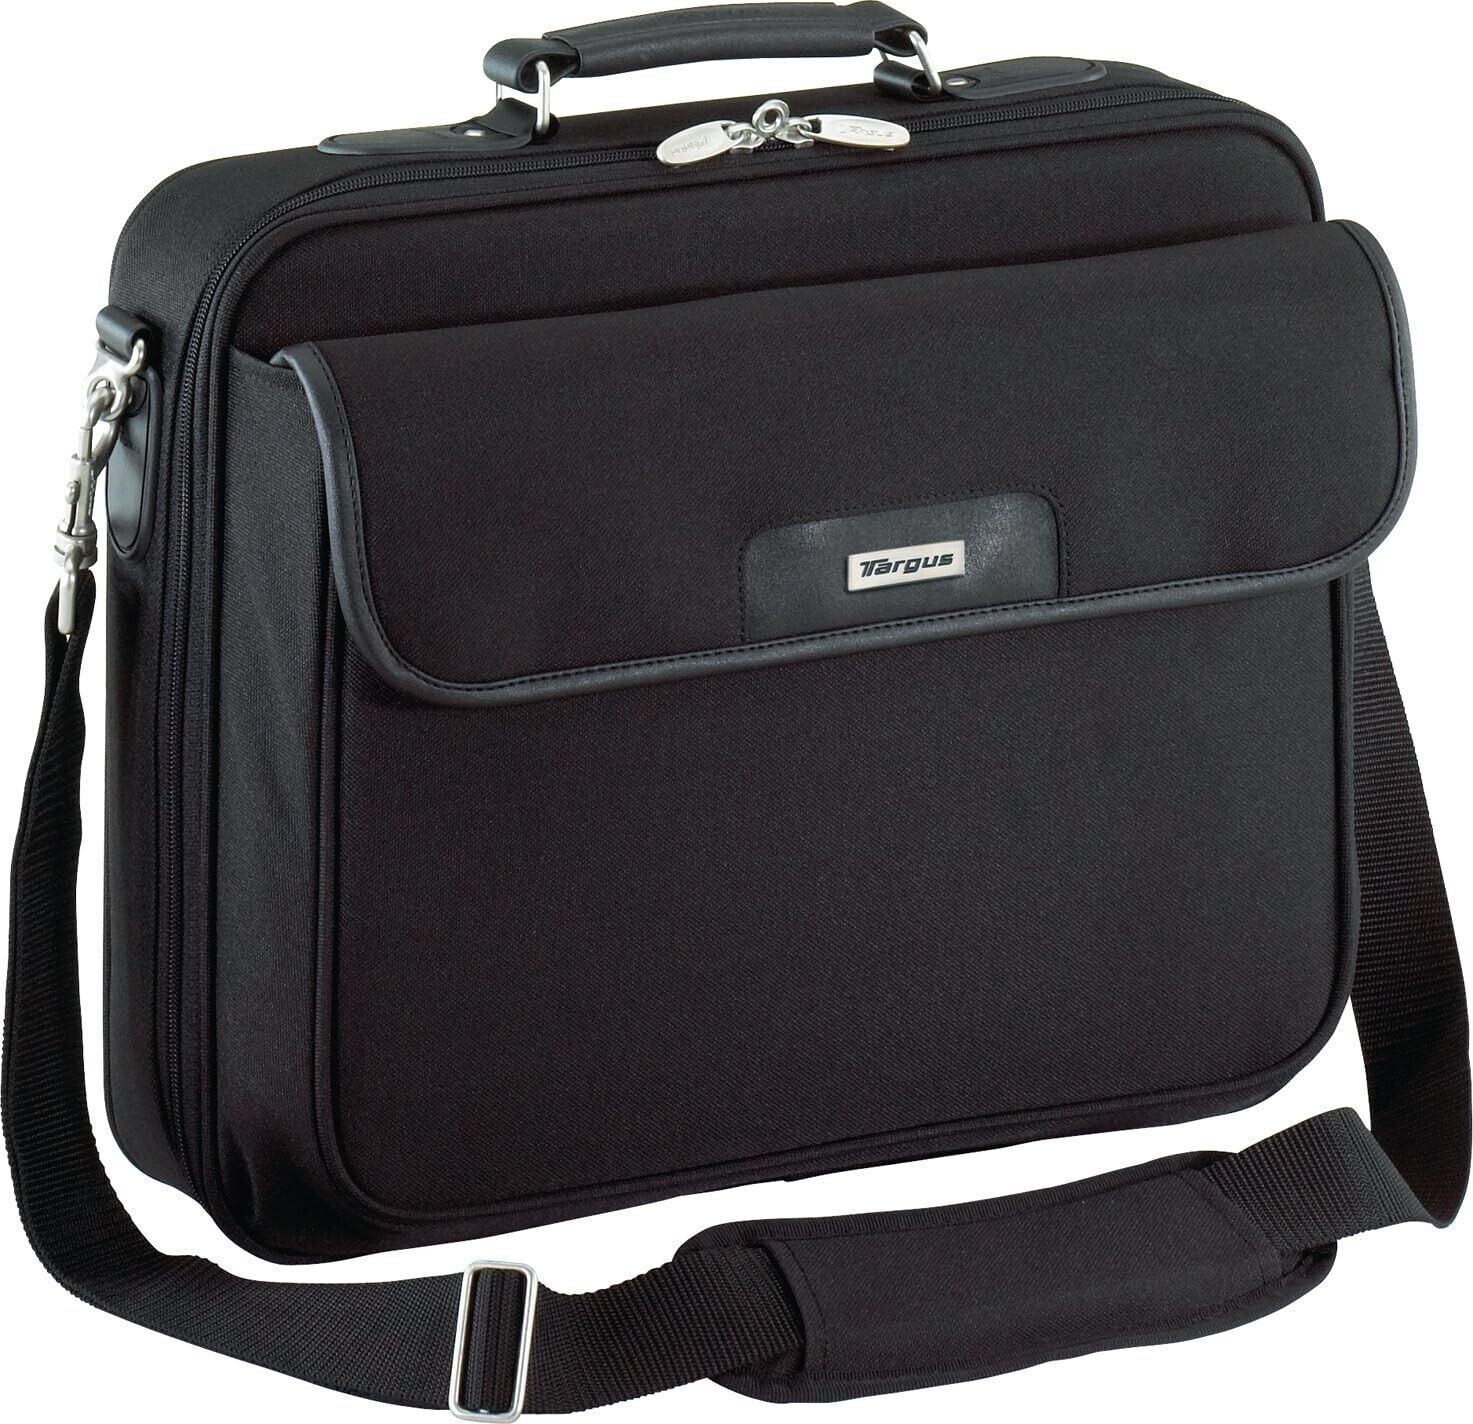 Targus Traditional Notepac Case Messenger Bag fits 15.6-Inch Laptop, Black